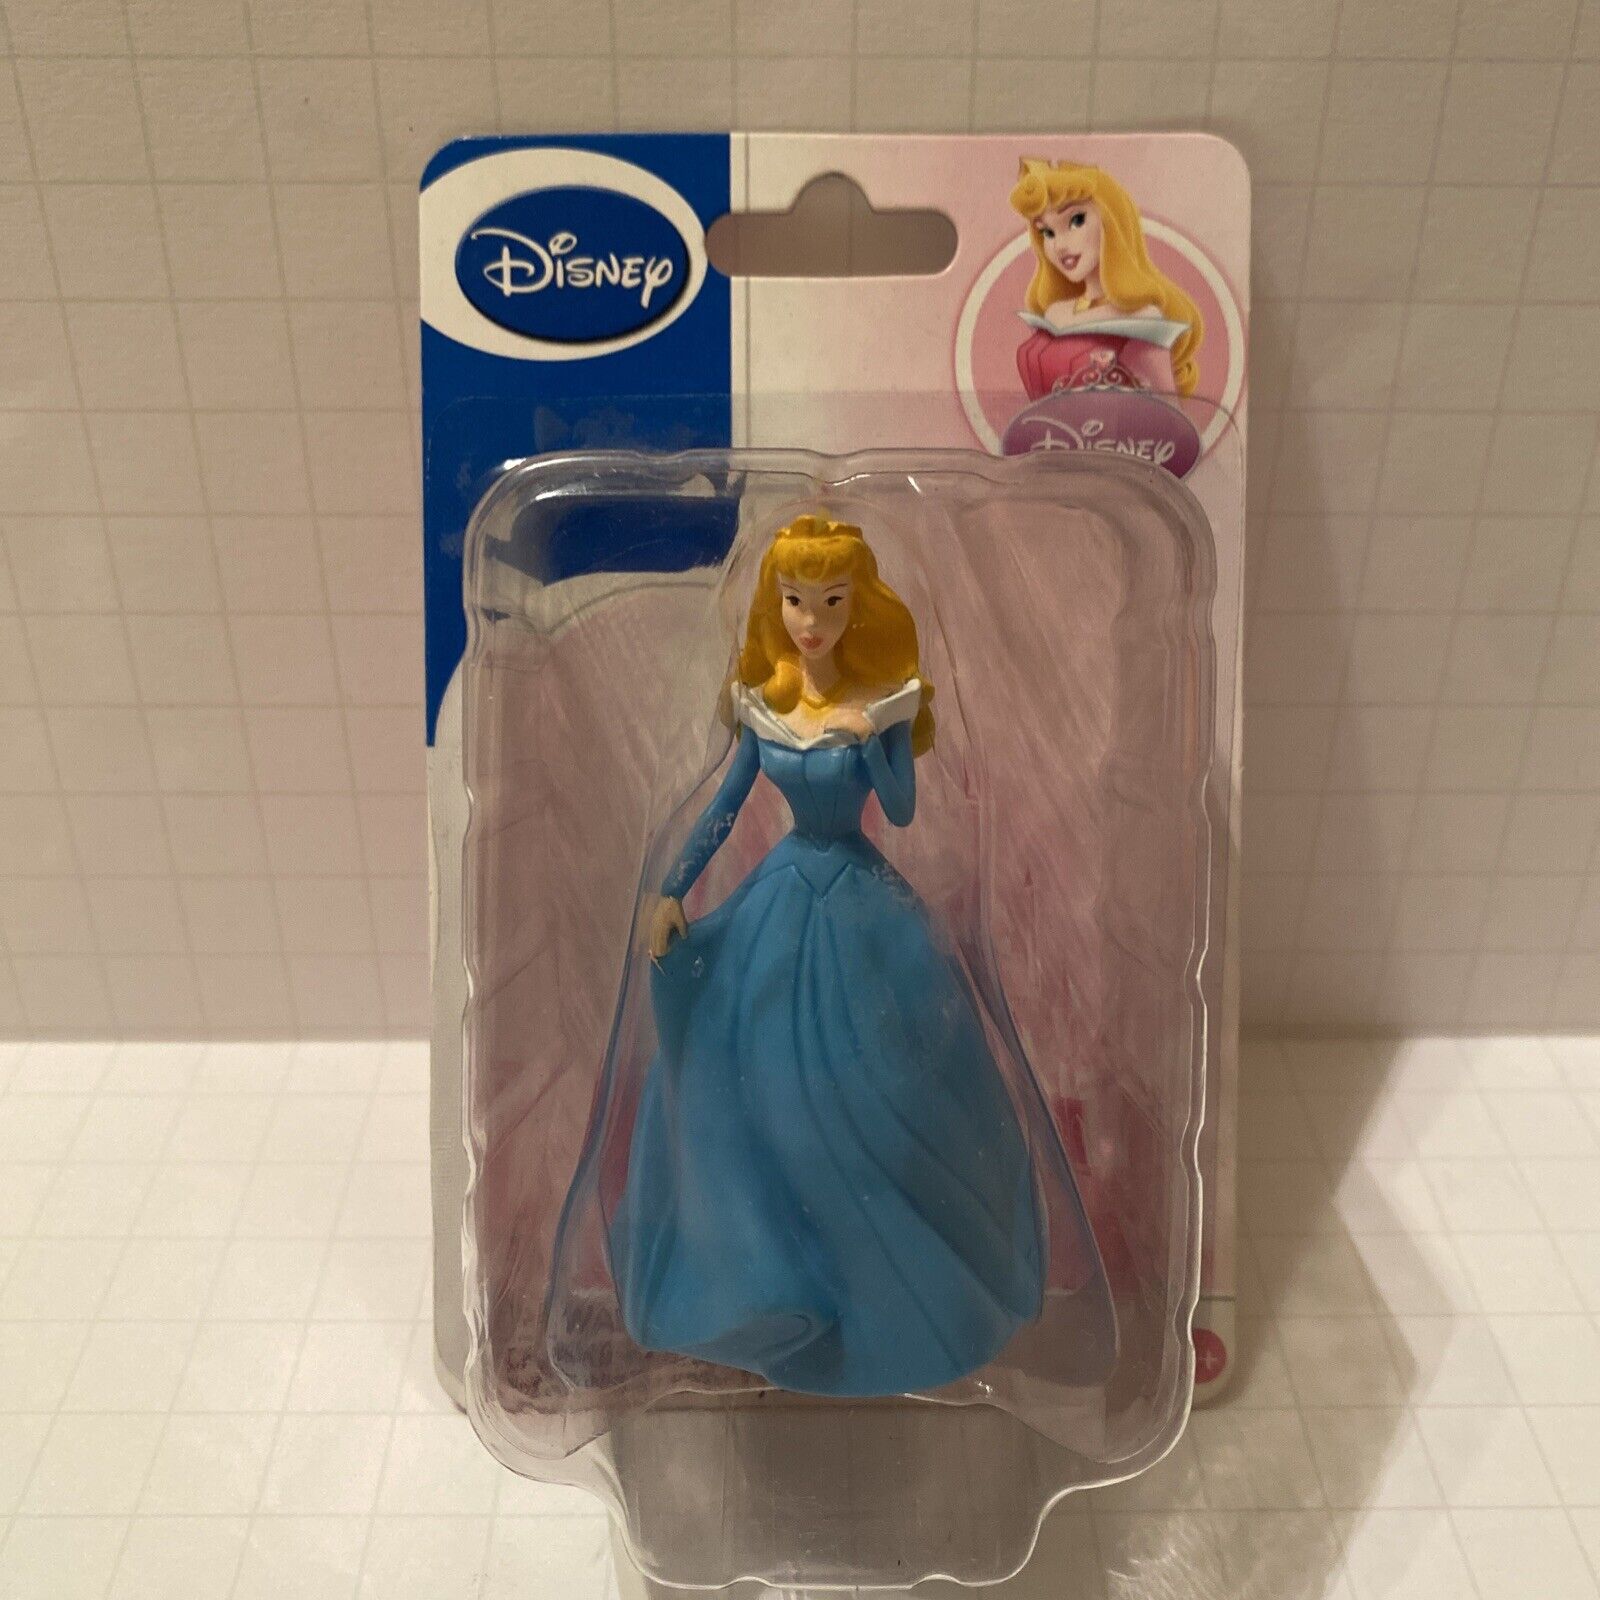 Disney Princess Sleeping Beauty 3” Cake Topper Beverly Hills Teddy Bear Co